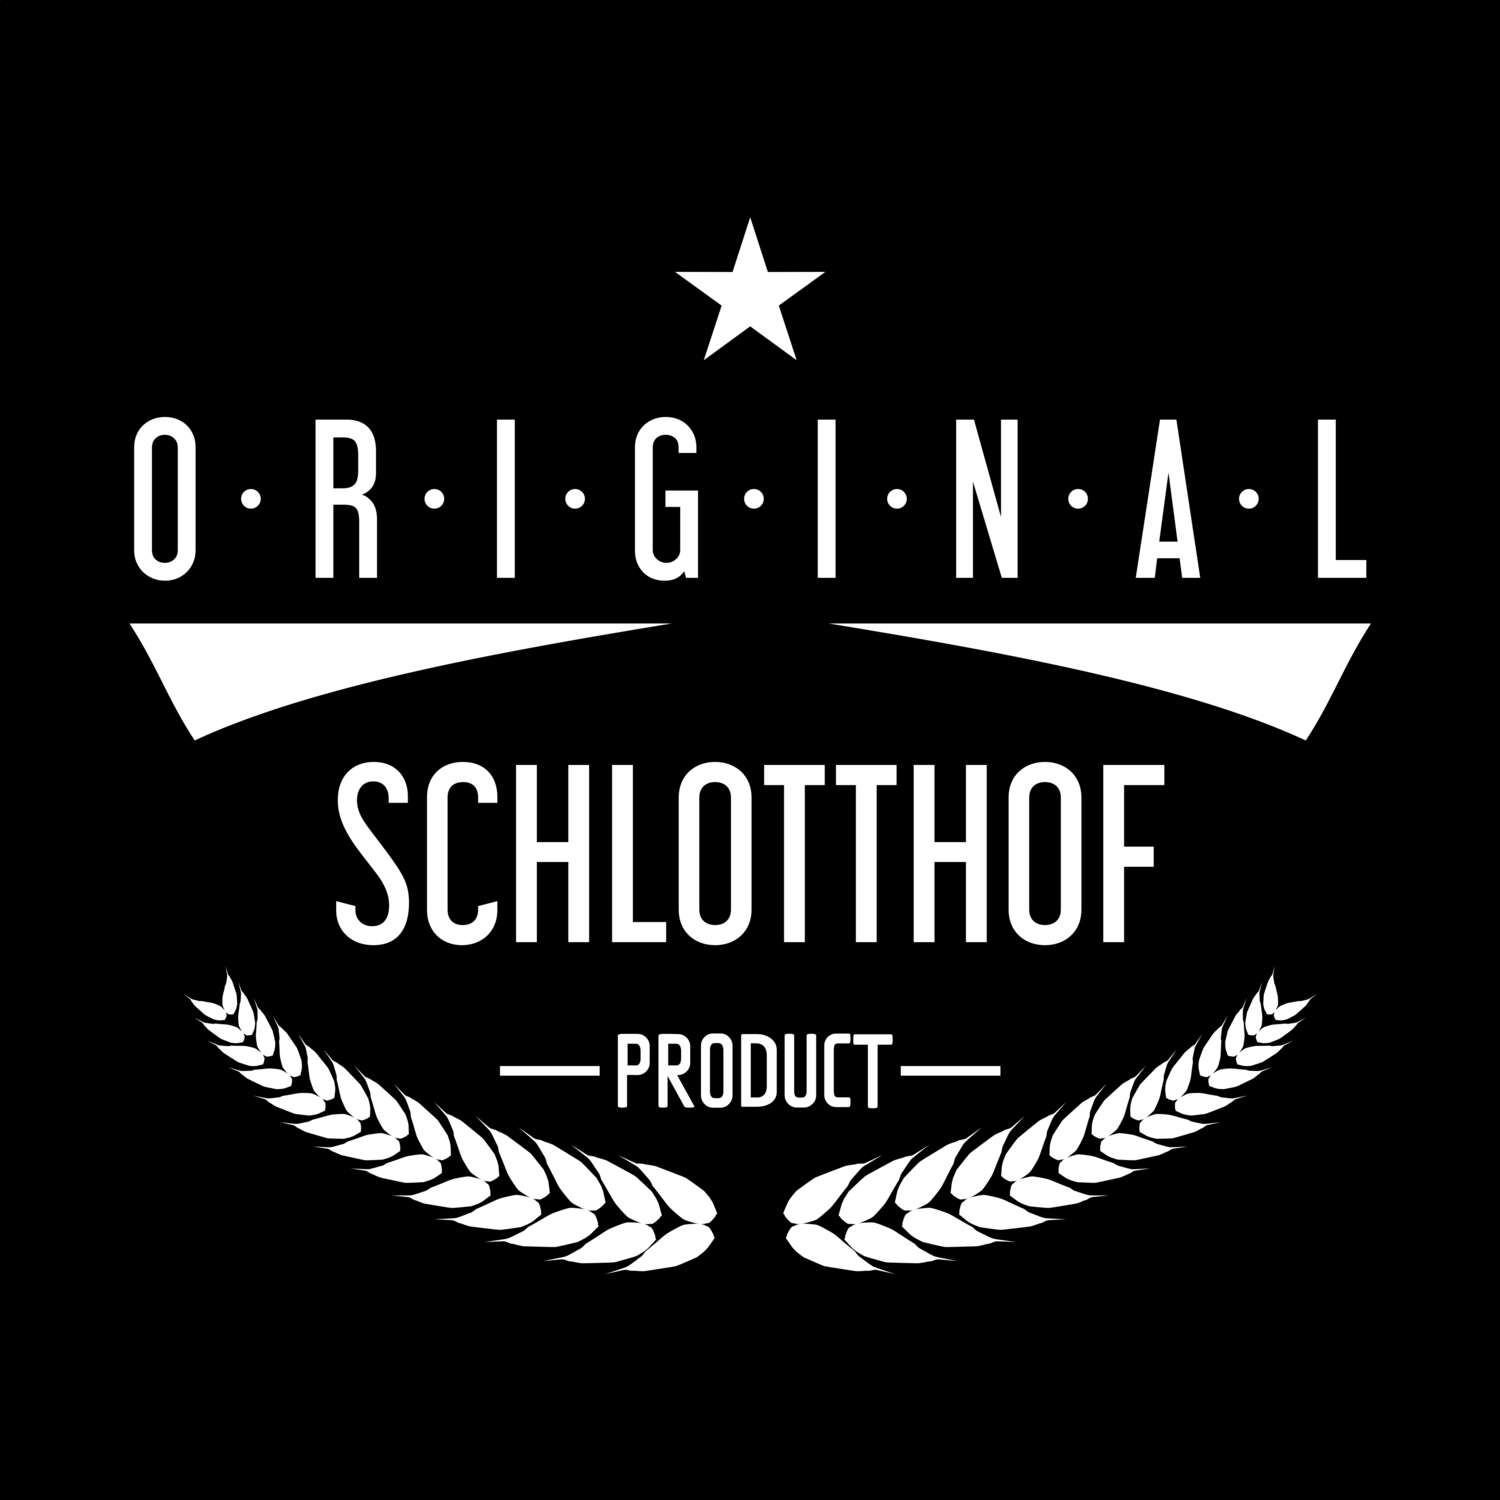 Schlotthof T-Shirt »Original Product«